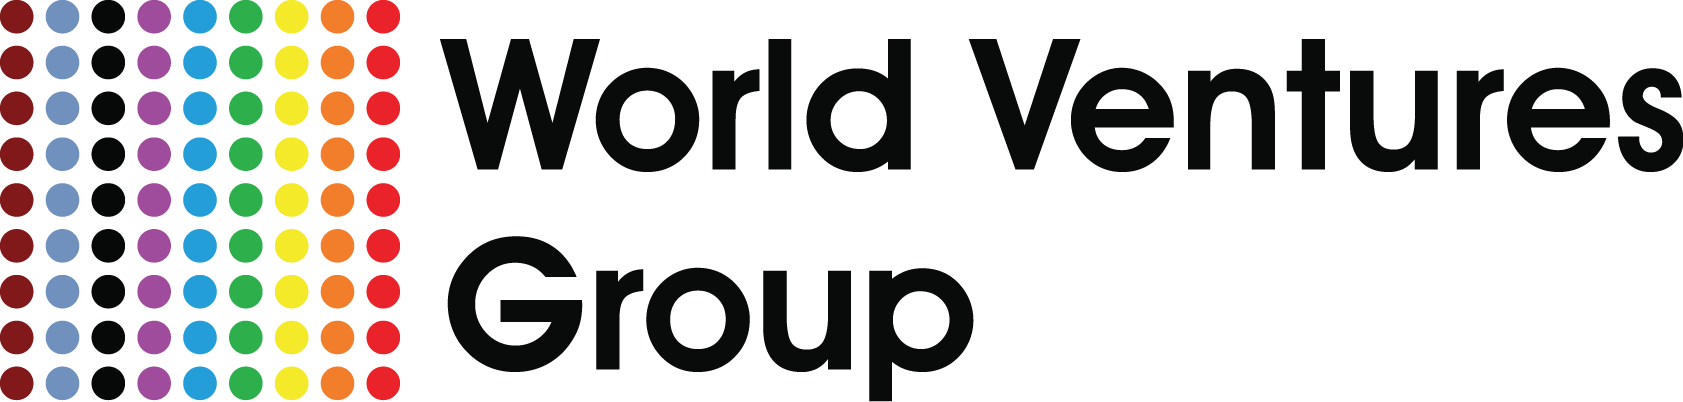 World Venture Group 